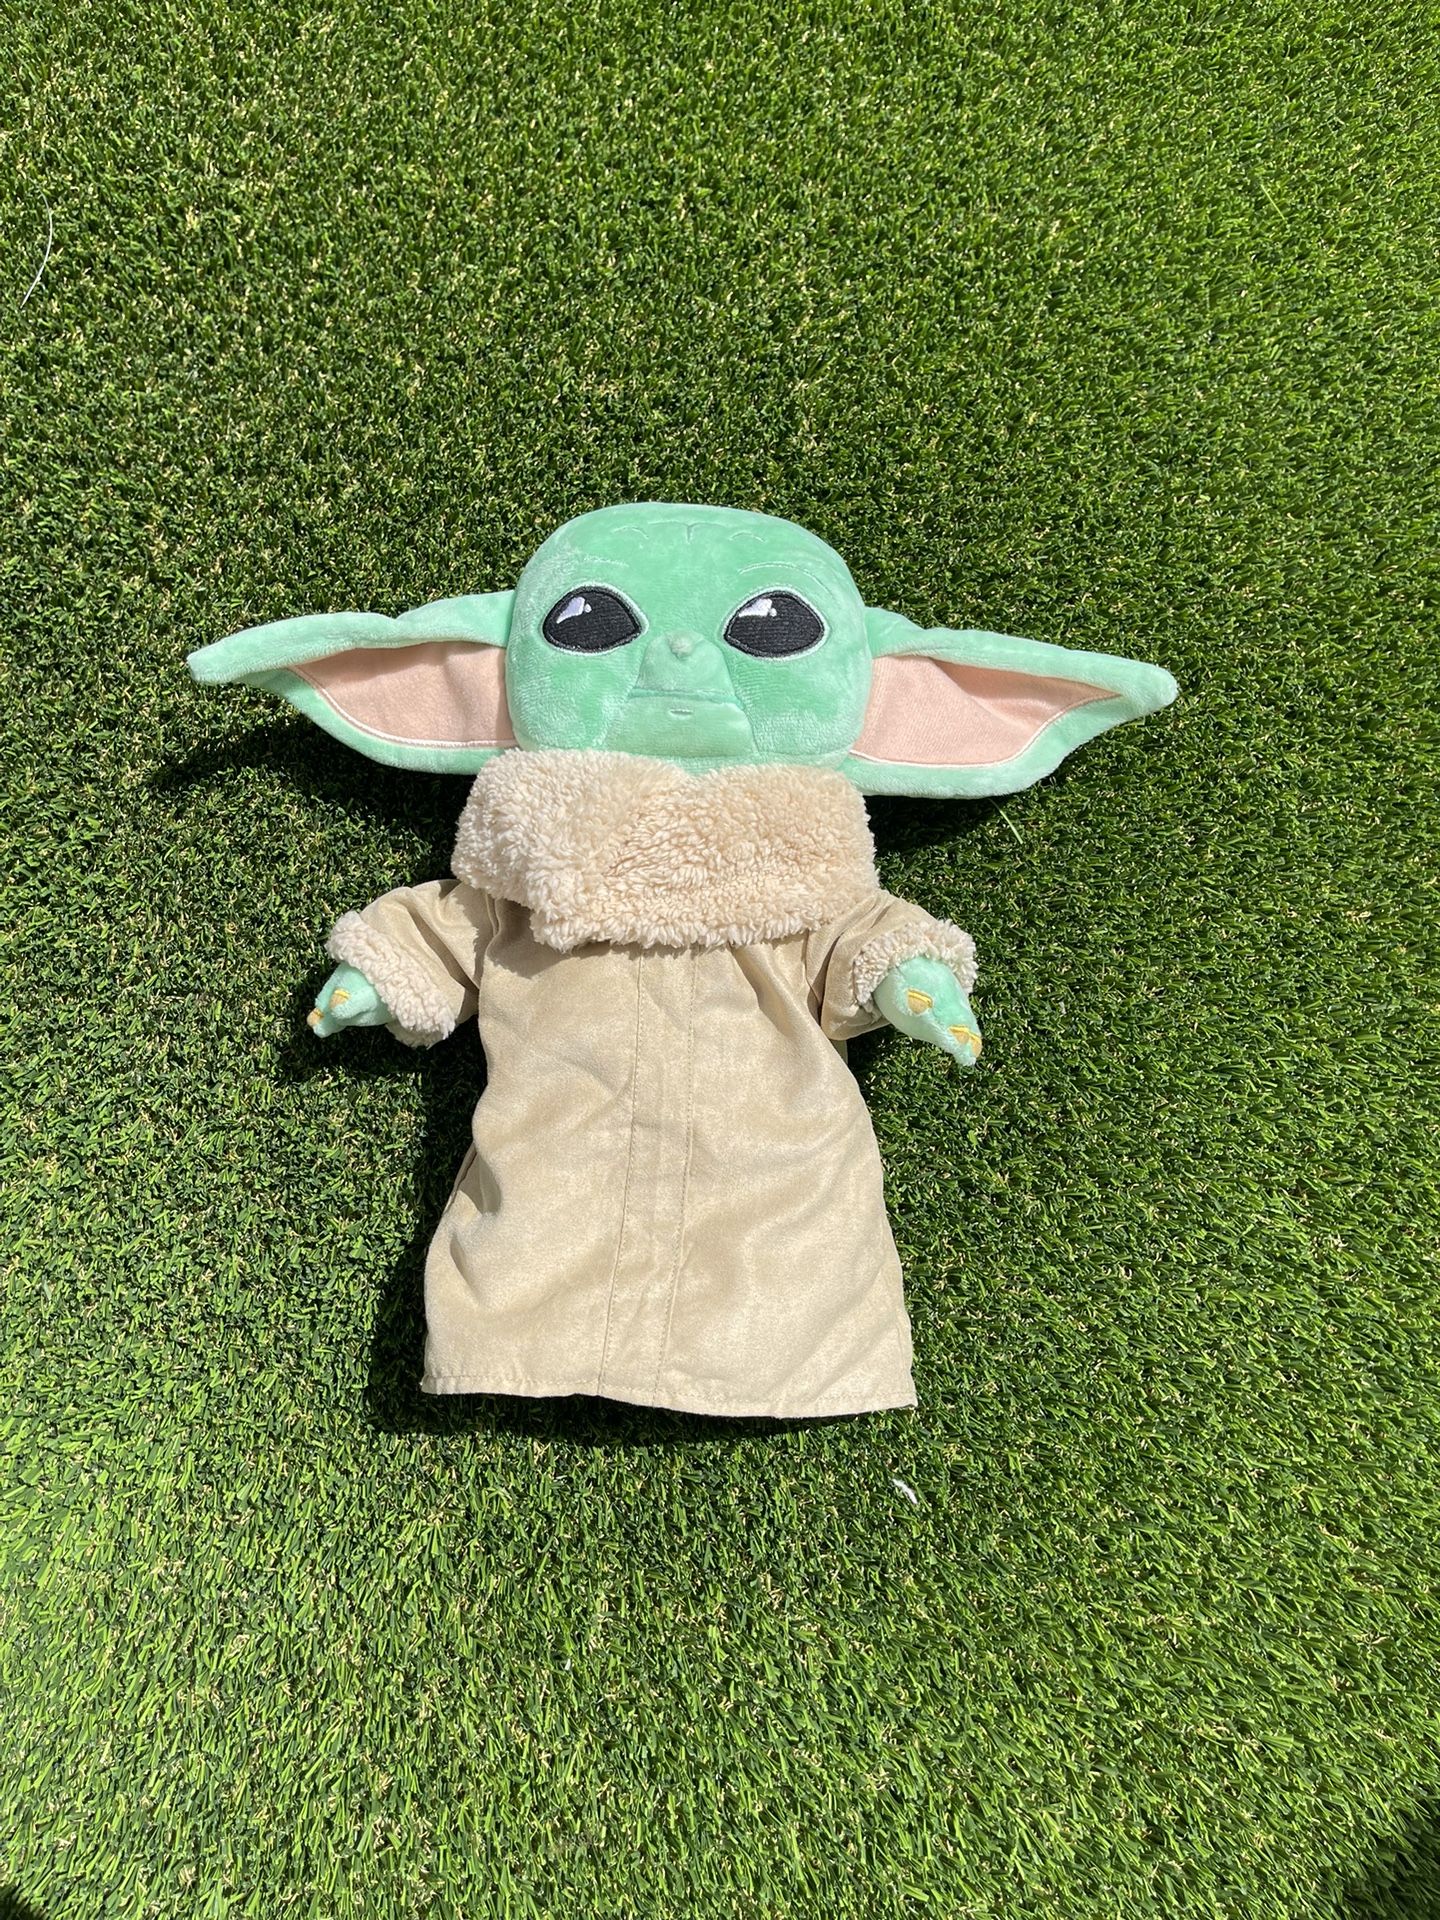 Star Wars Baby Yoda Grogu Plush Doll Toy The Child 13" Mandalorian Northwest Co